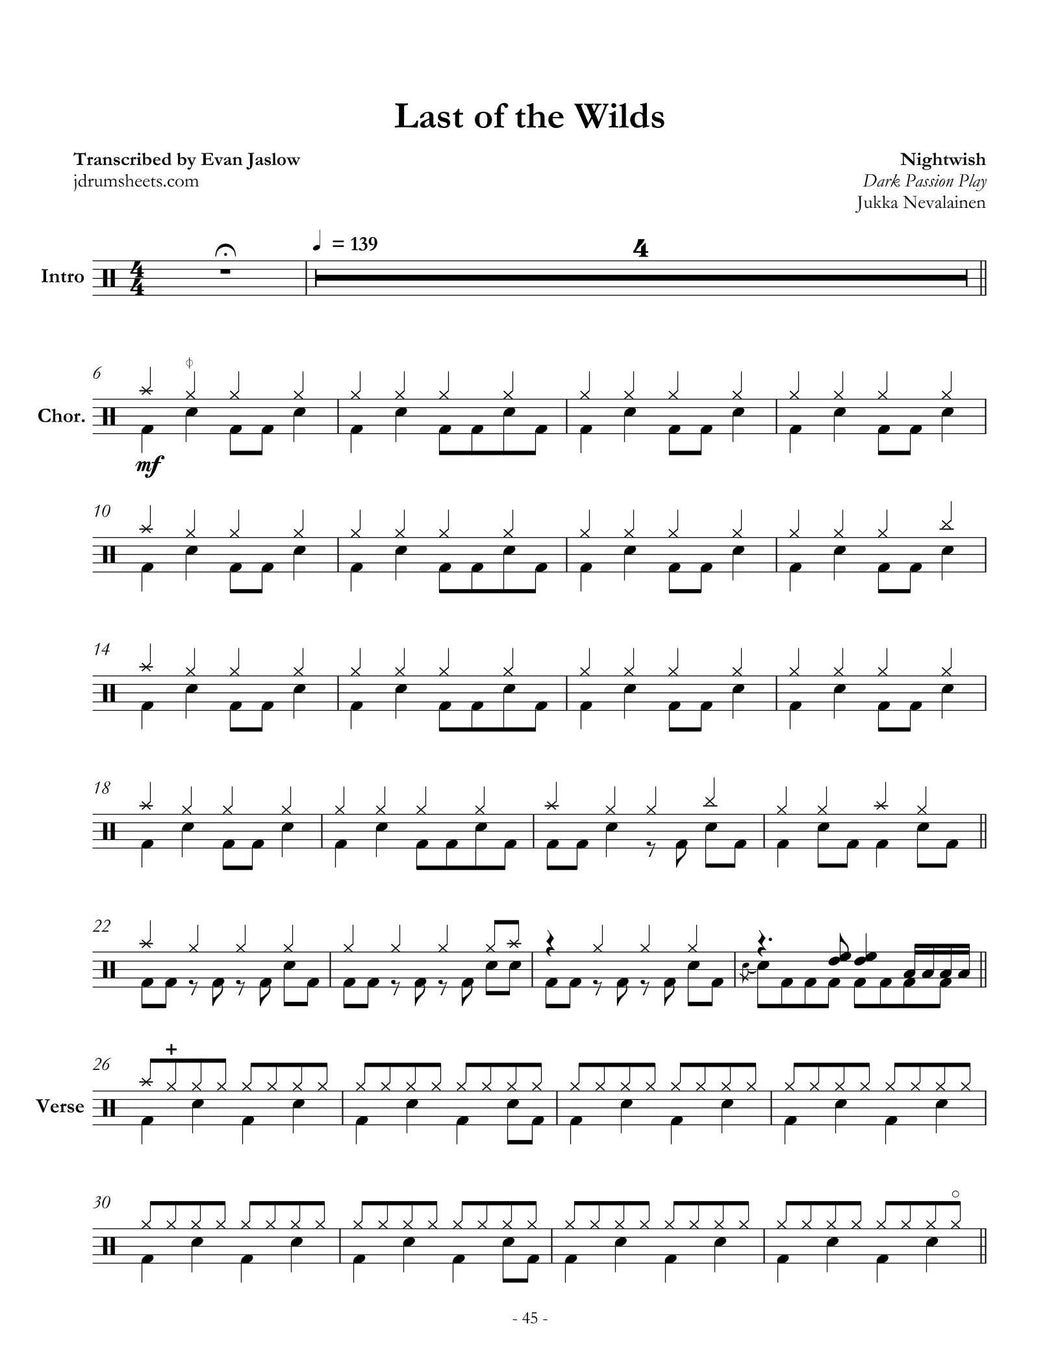 Last of the Wilds - Nightwish - Full Drum Transcription / Drum Sheet Music - Jaslow Drum Sheets